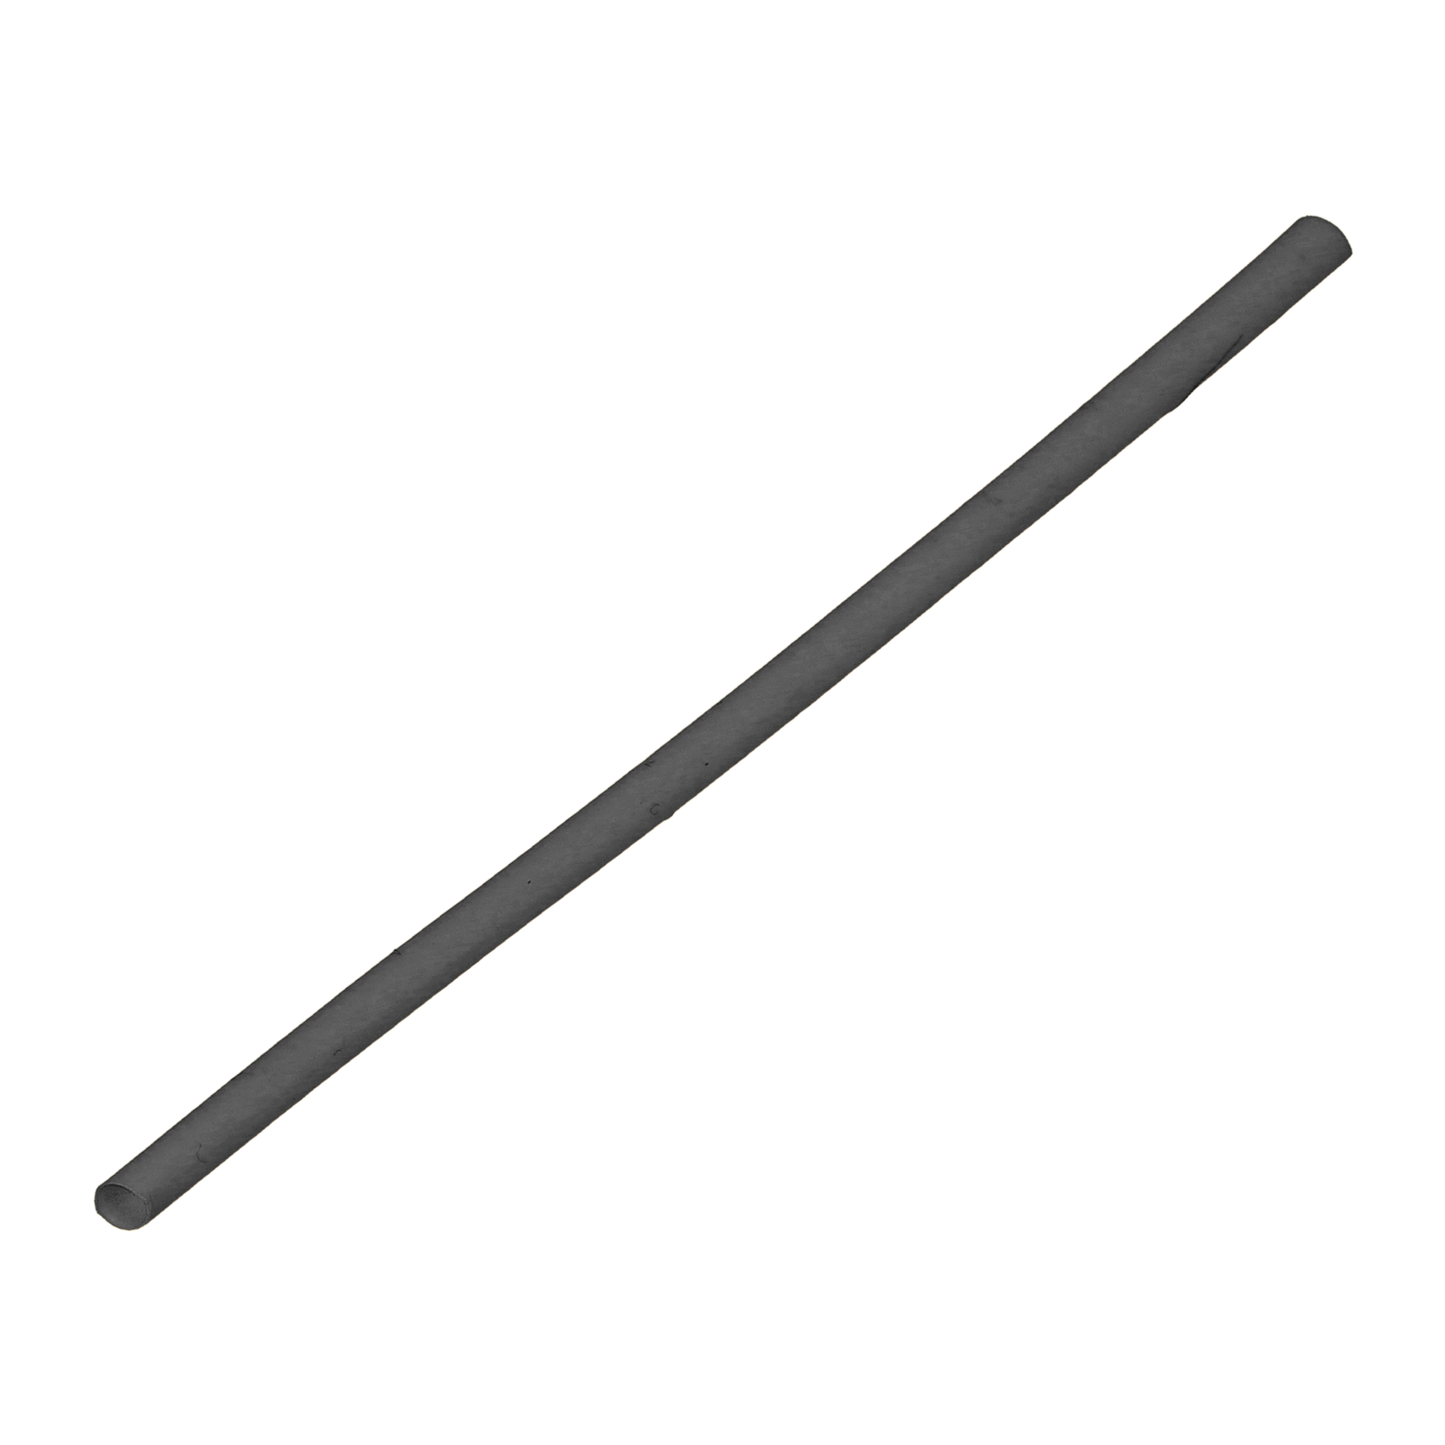 Schrumpfschlauch Ø 4mm, 1m lang, schwarz, in Blisterpackung